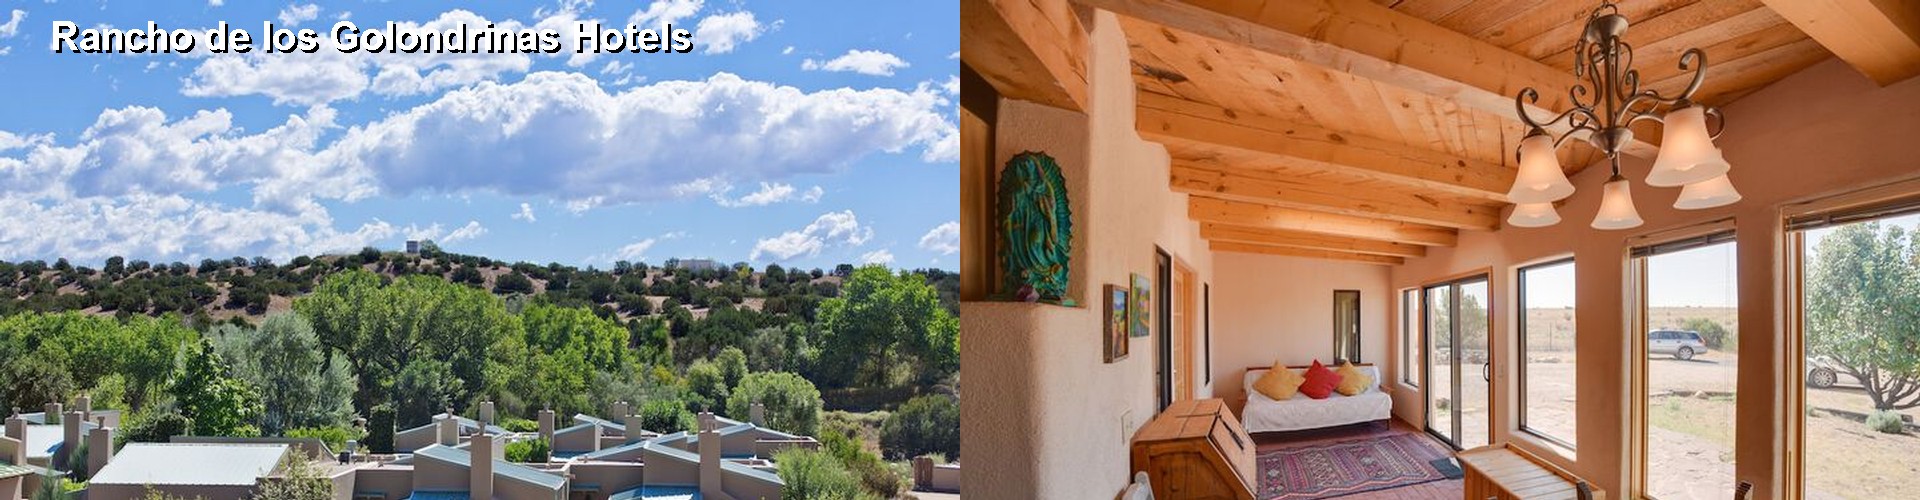 5 Best Hotels near Rancho de los Golondrinas